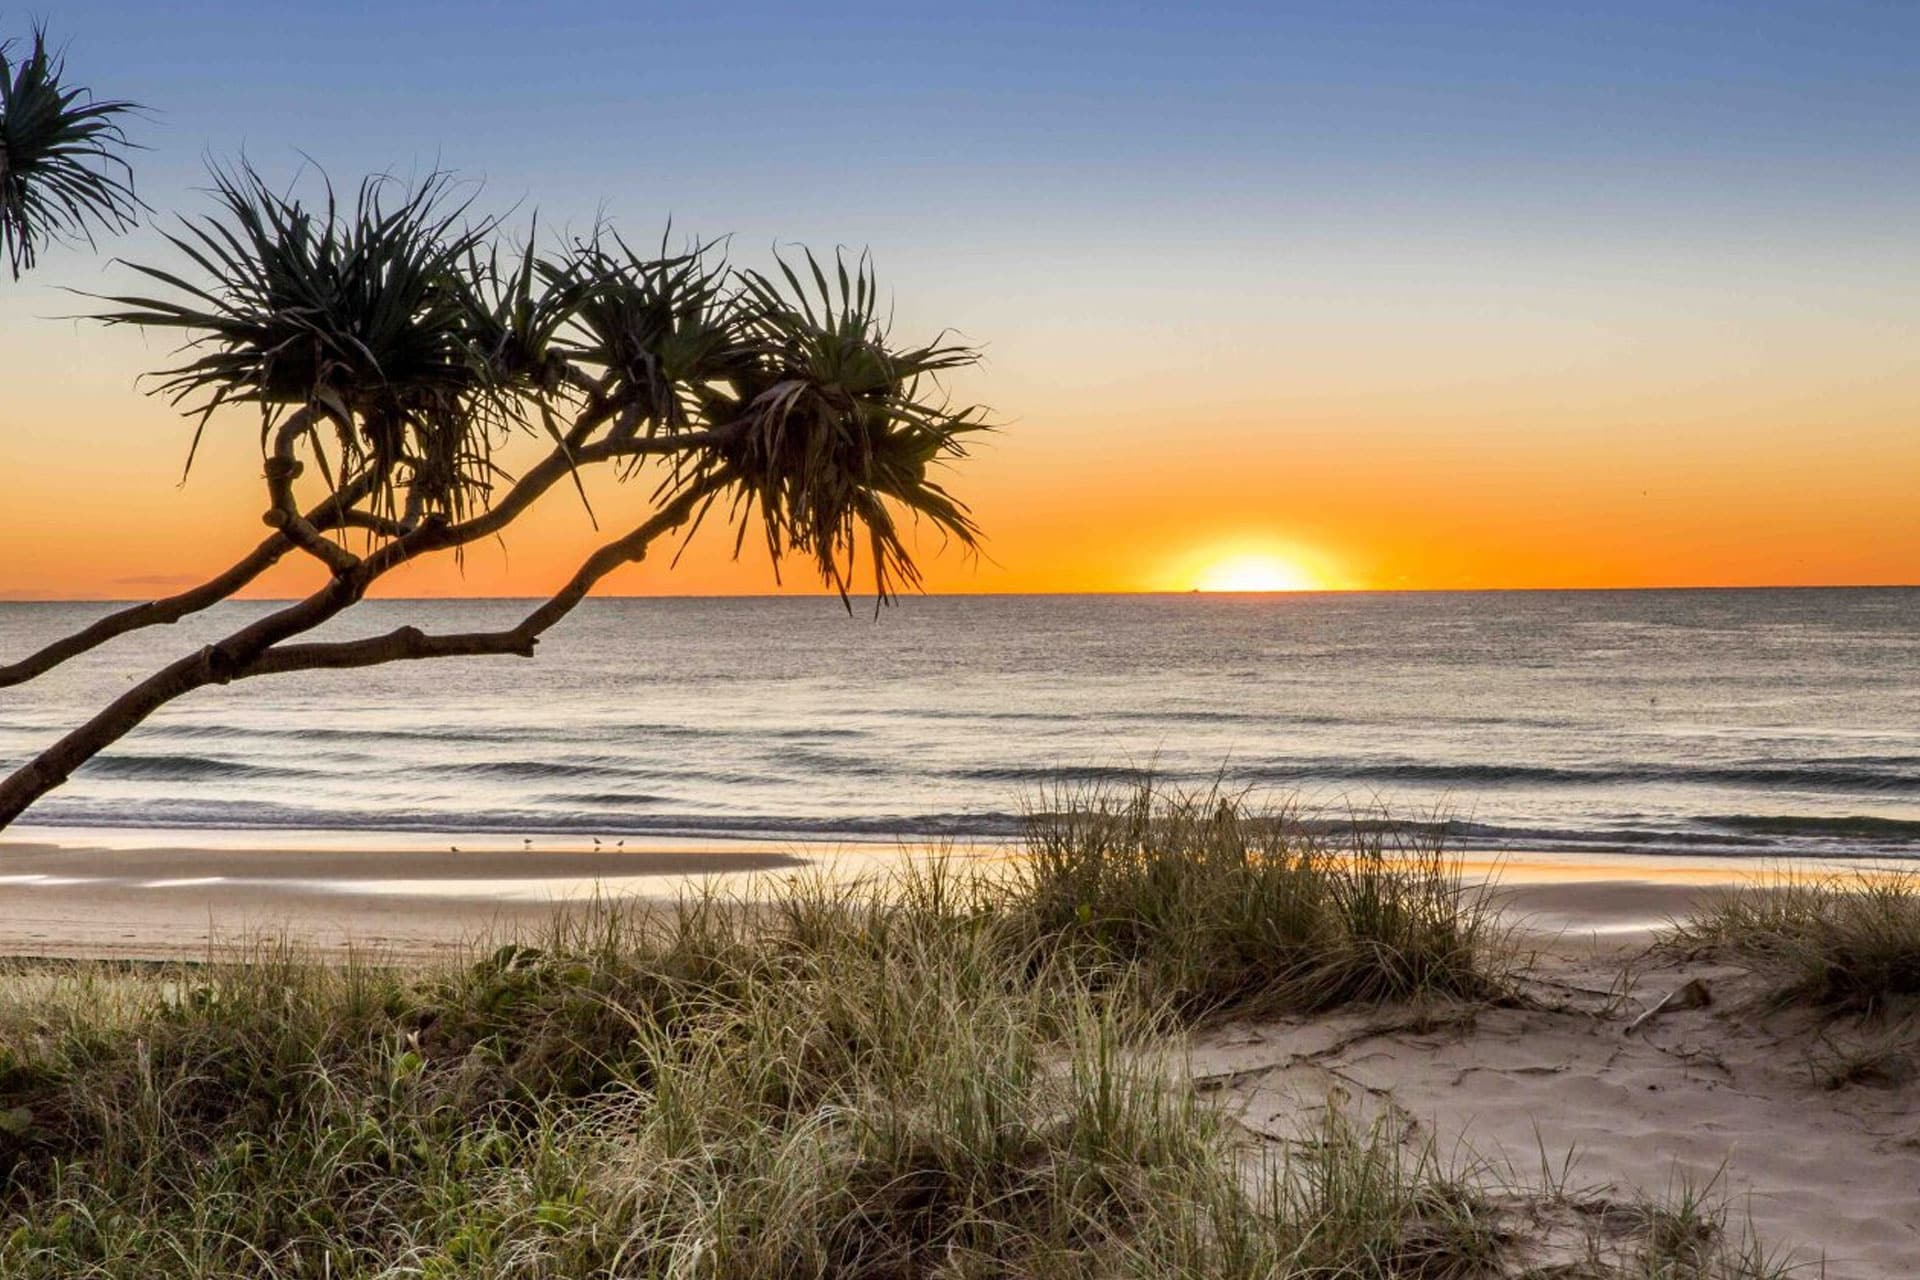 Mermaid Beach Sunset — Locksmiths in Mermaid Beach, QLD